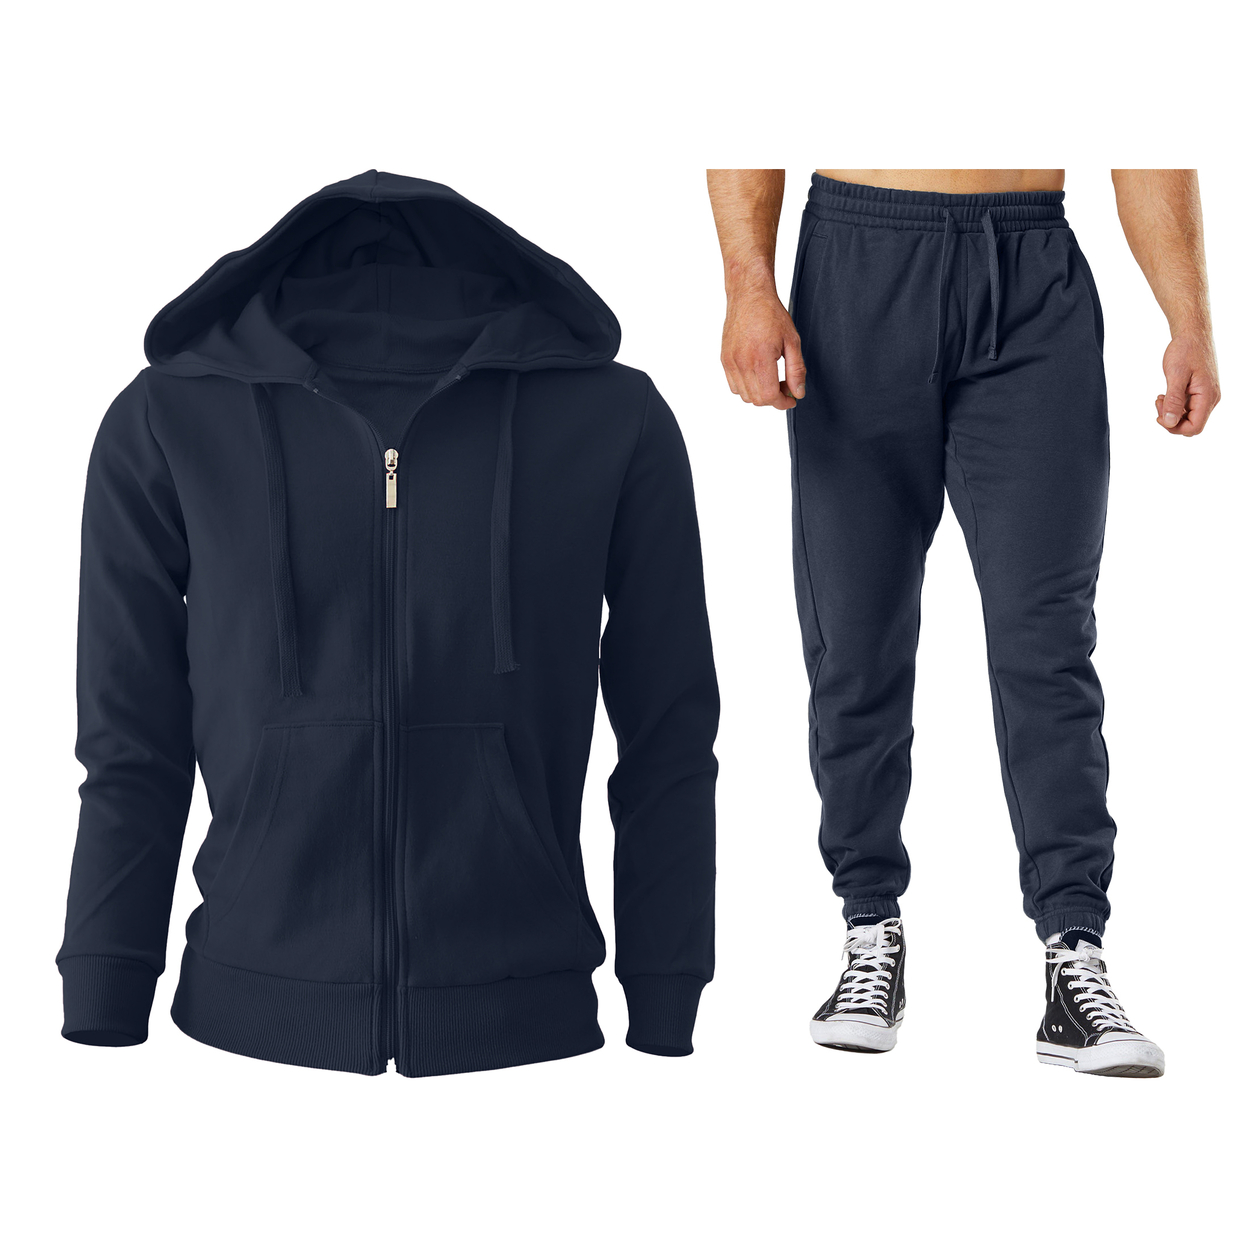 2-Piece: Men's Winter Warm Cozy Athletic Multi-Pockets BIG & TALL Sweatsuit Set - Charcoal, Small